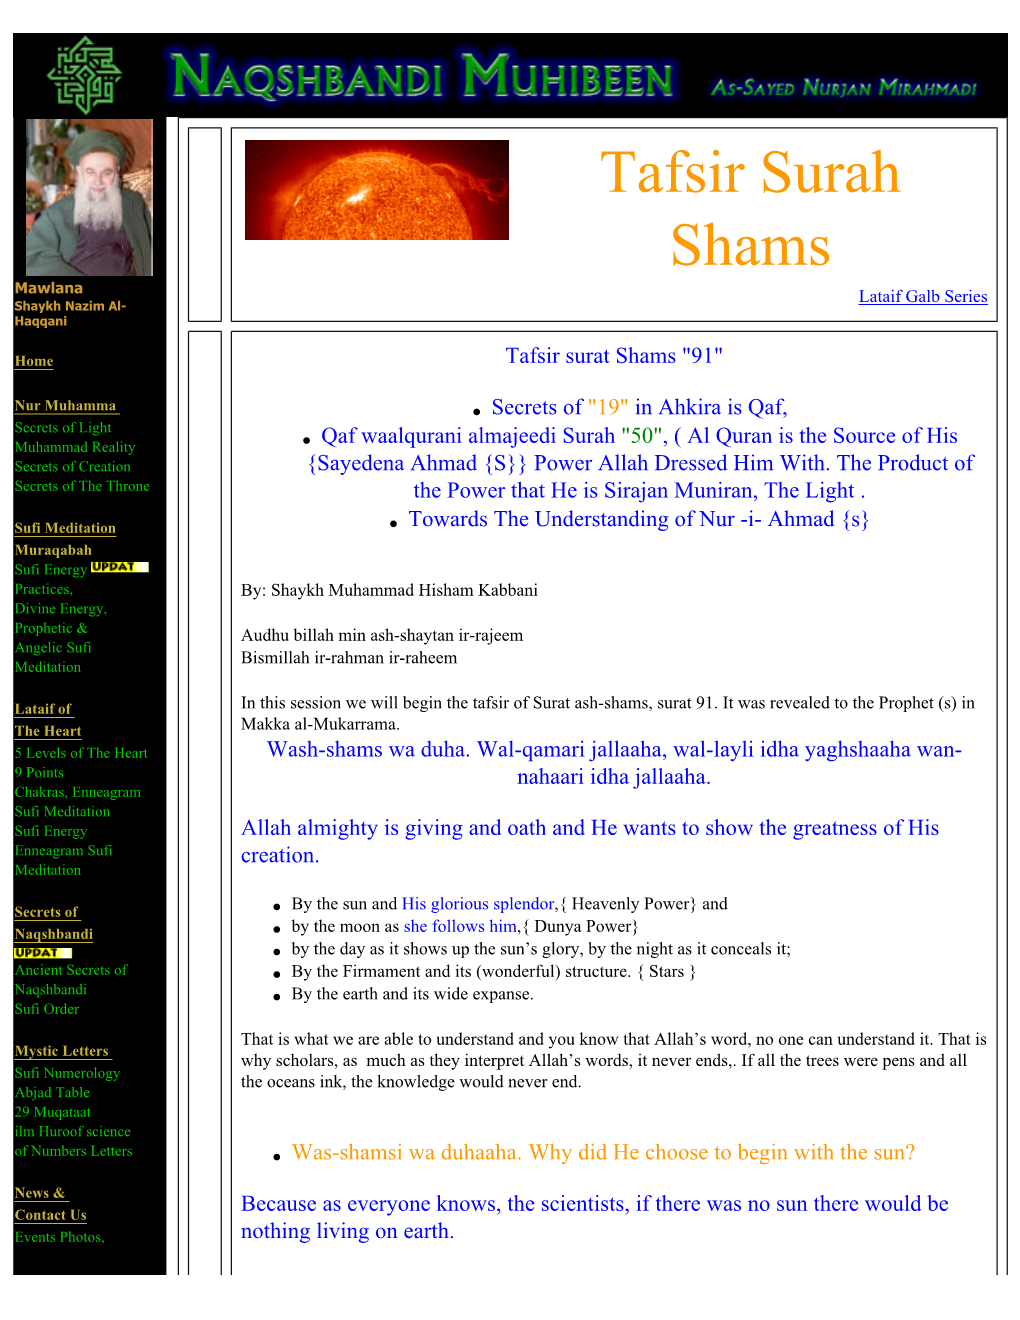 Tafsir of Surah Shams